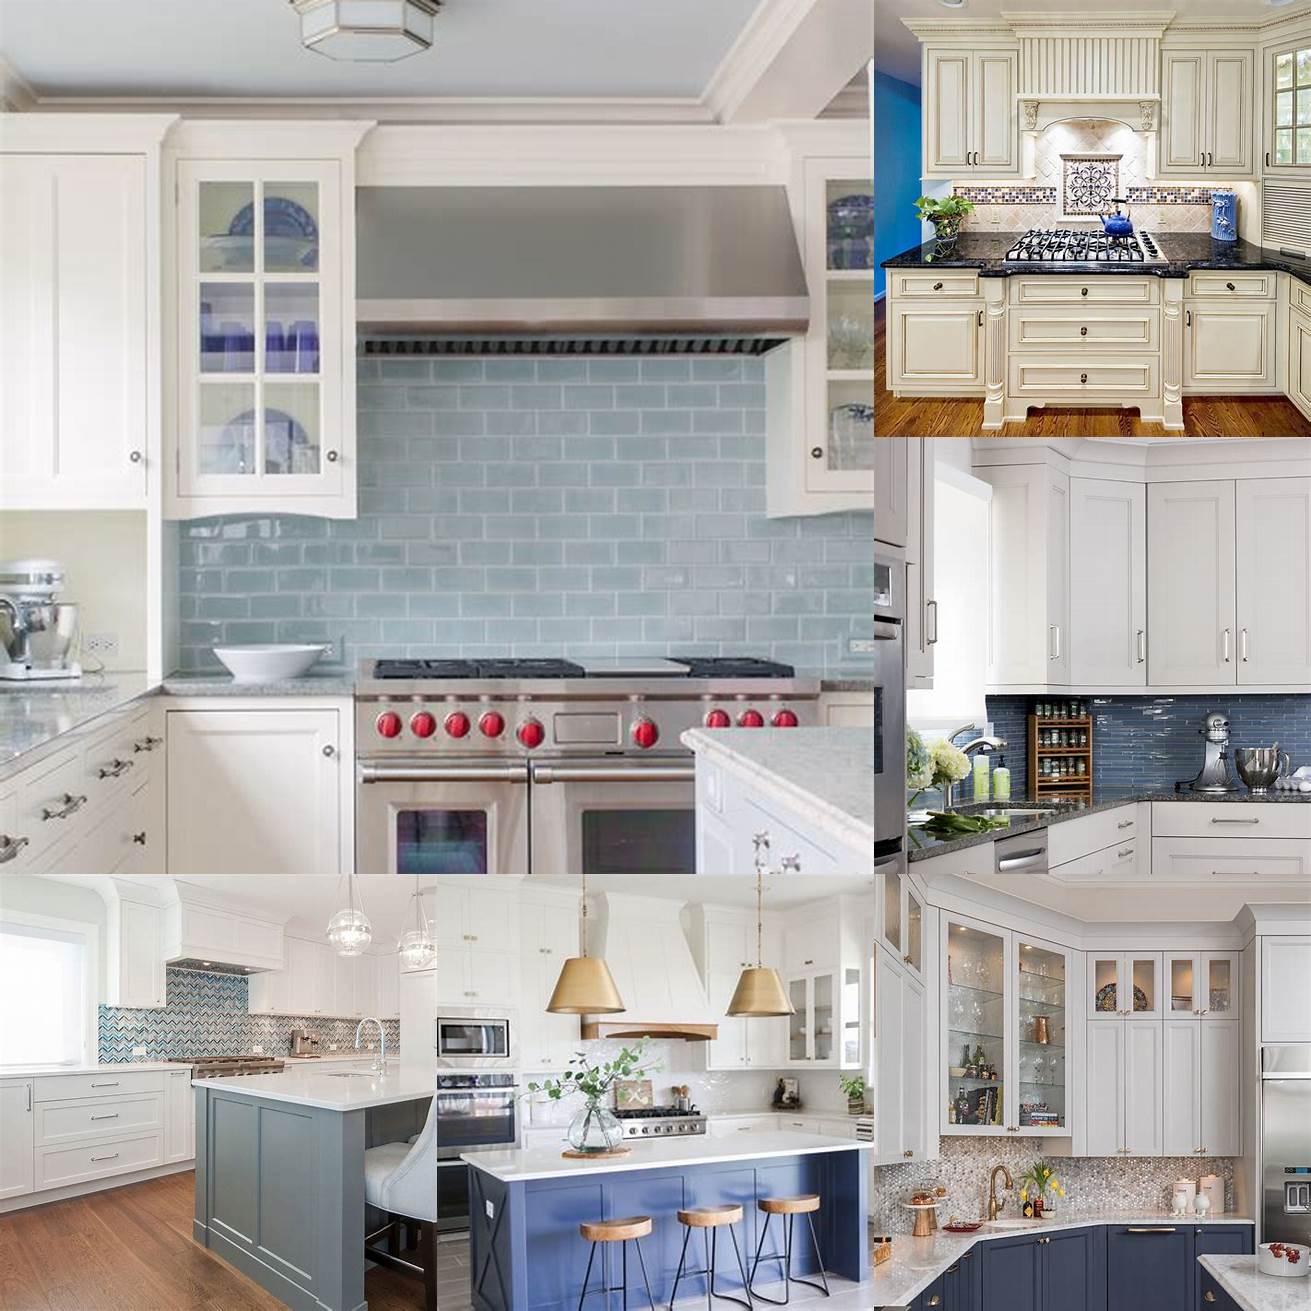 Off White Kitchen Cabinets with a blue backsplash